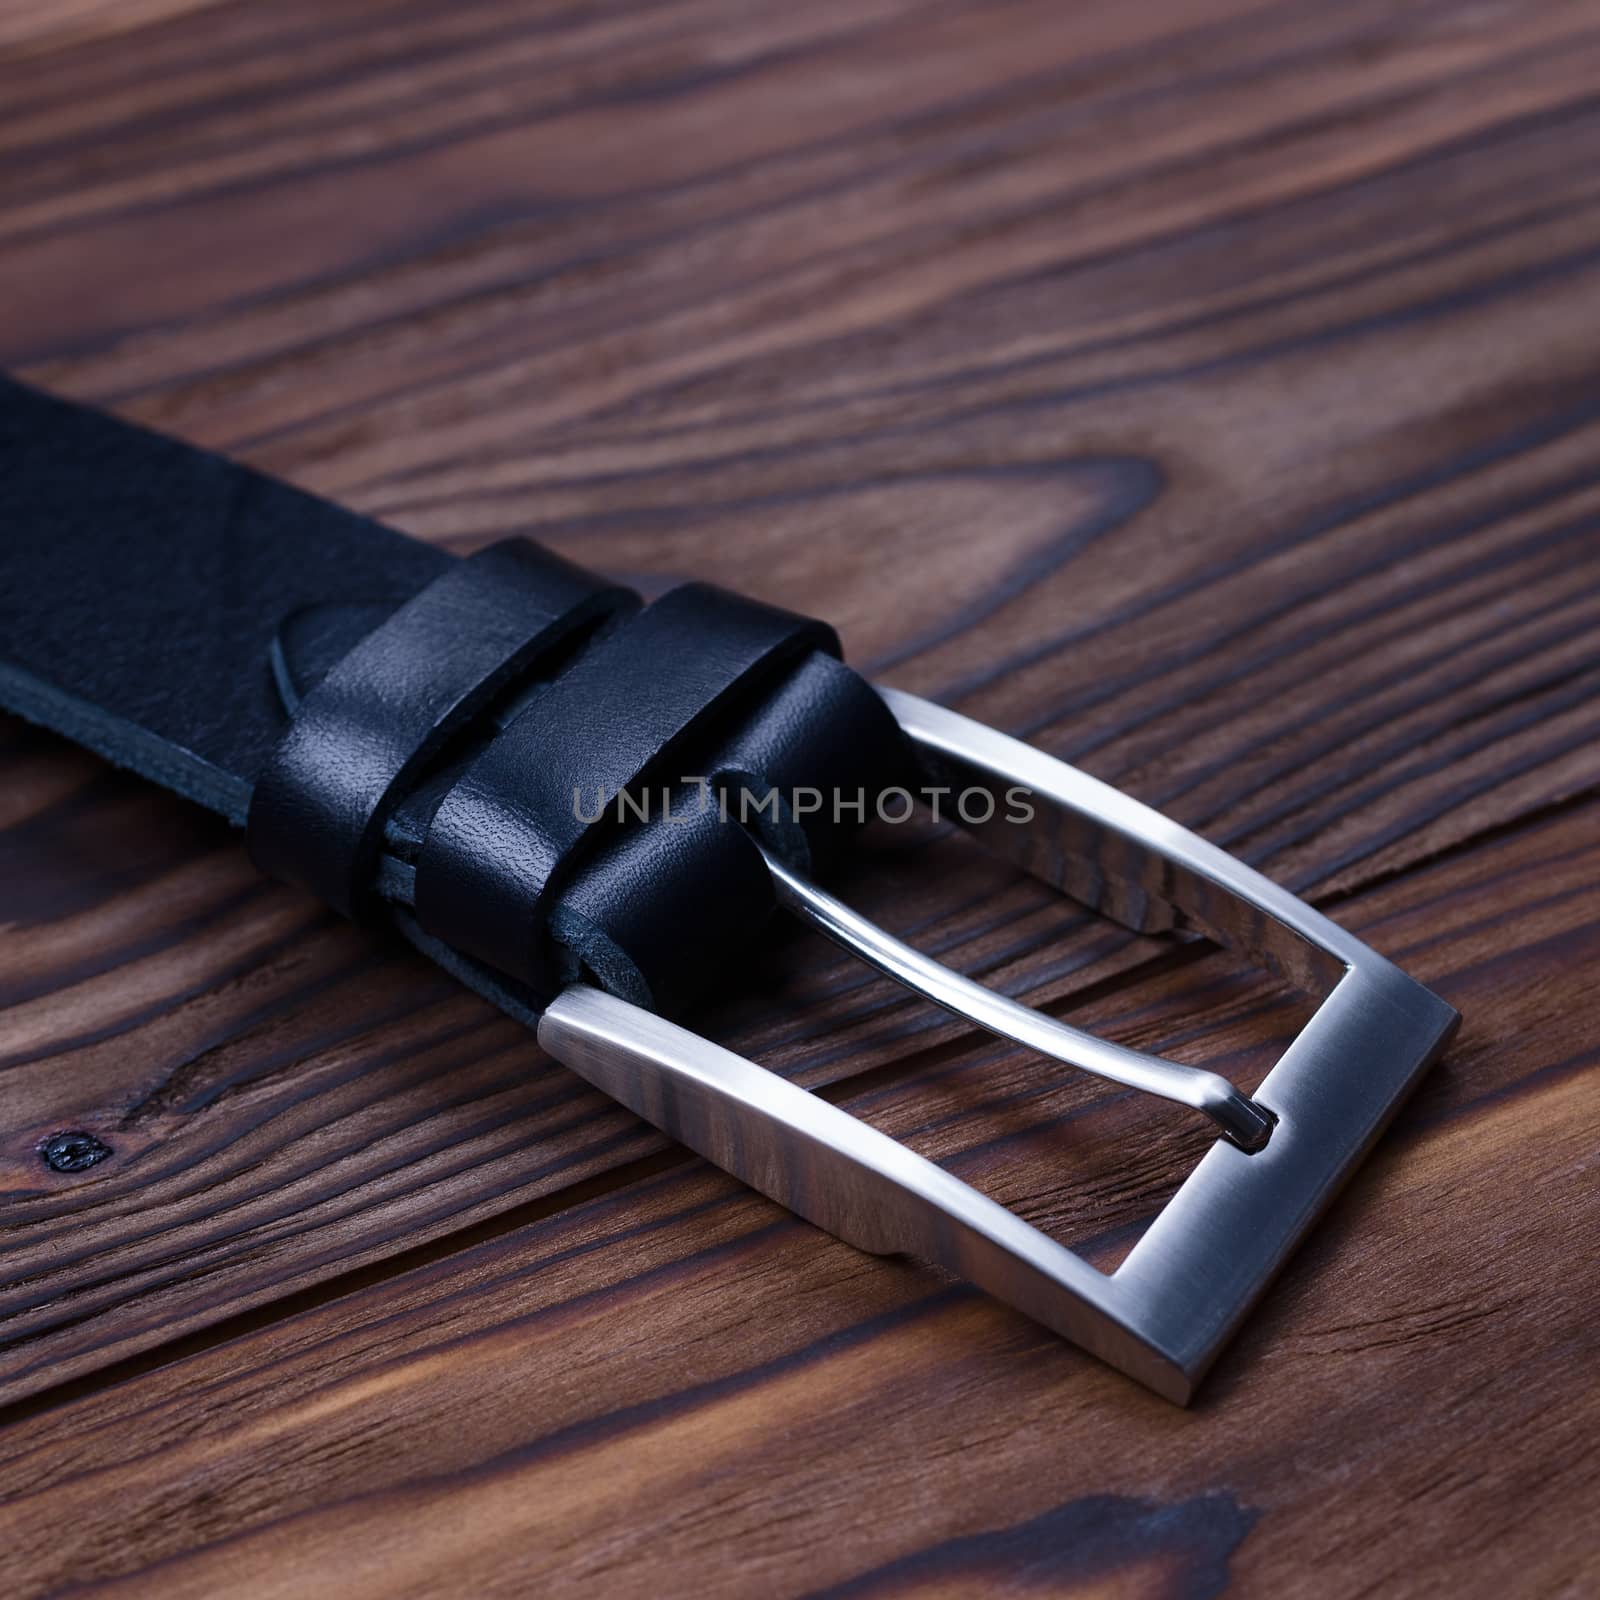 Black handmade belt buckle lies on textured wooden background closeup. Side view. Stock photo of businessman accessories.